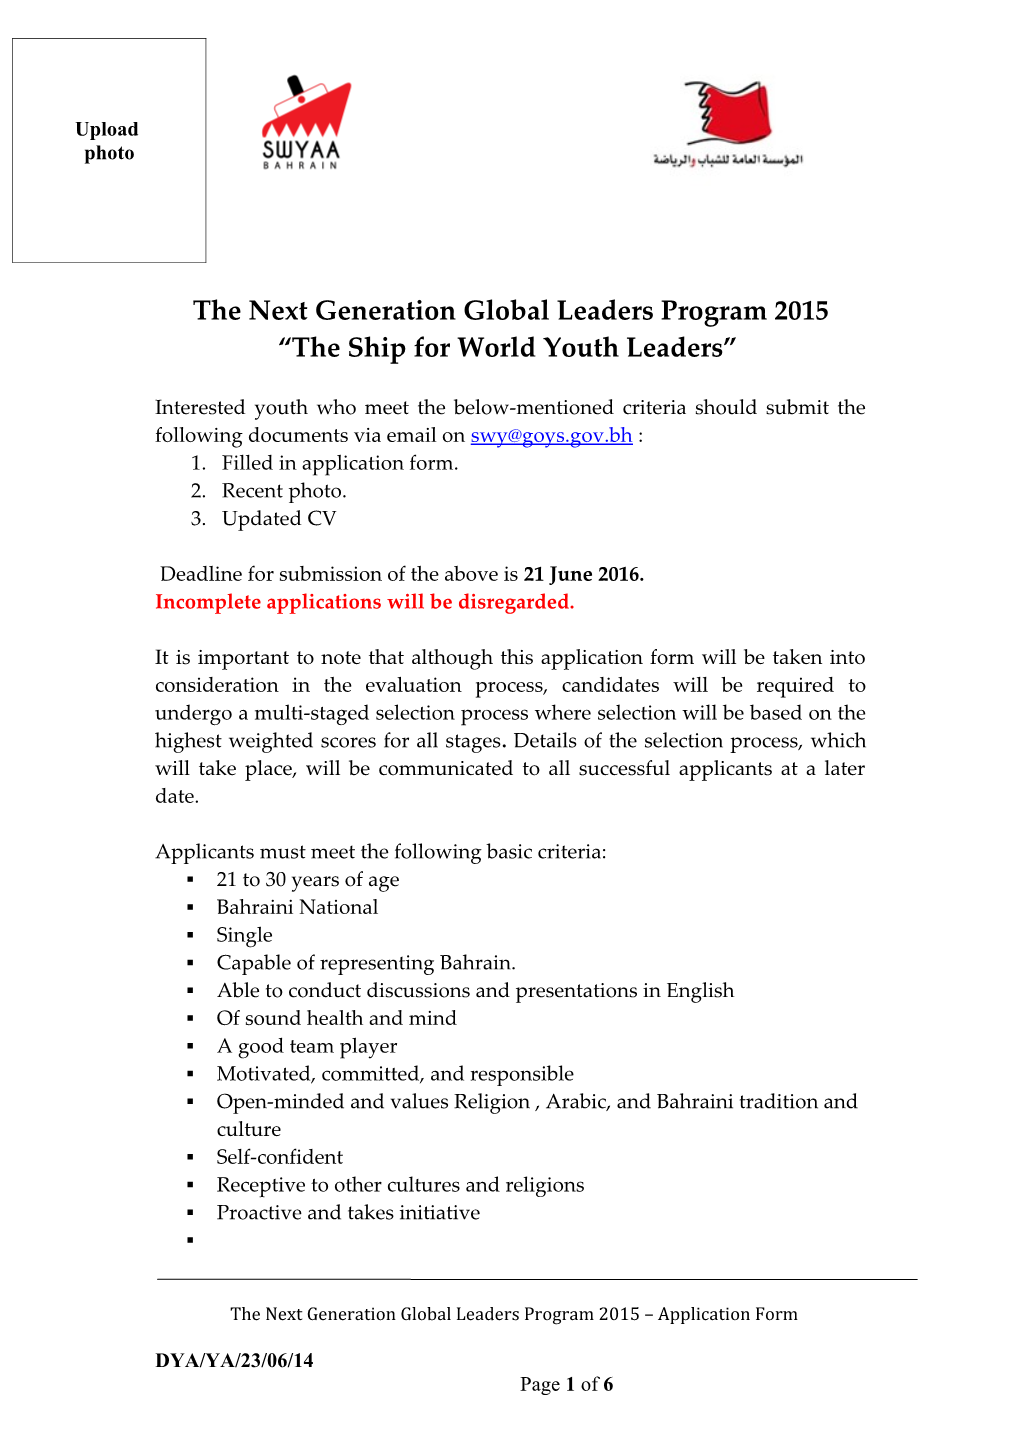 The Next Generation Global Leaders Program 2015